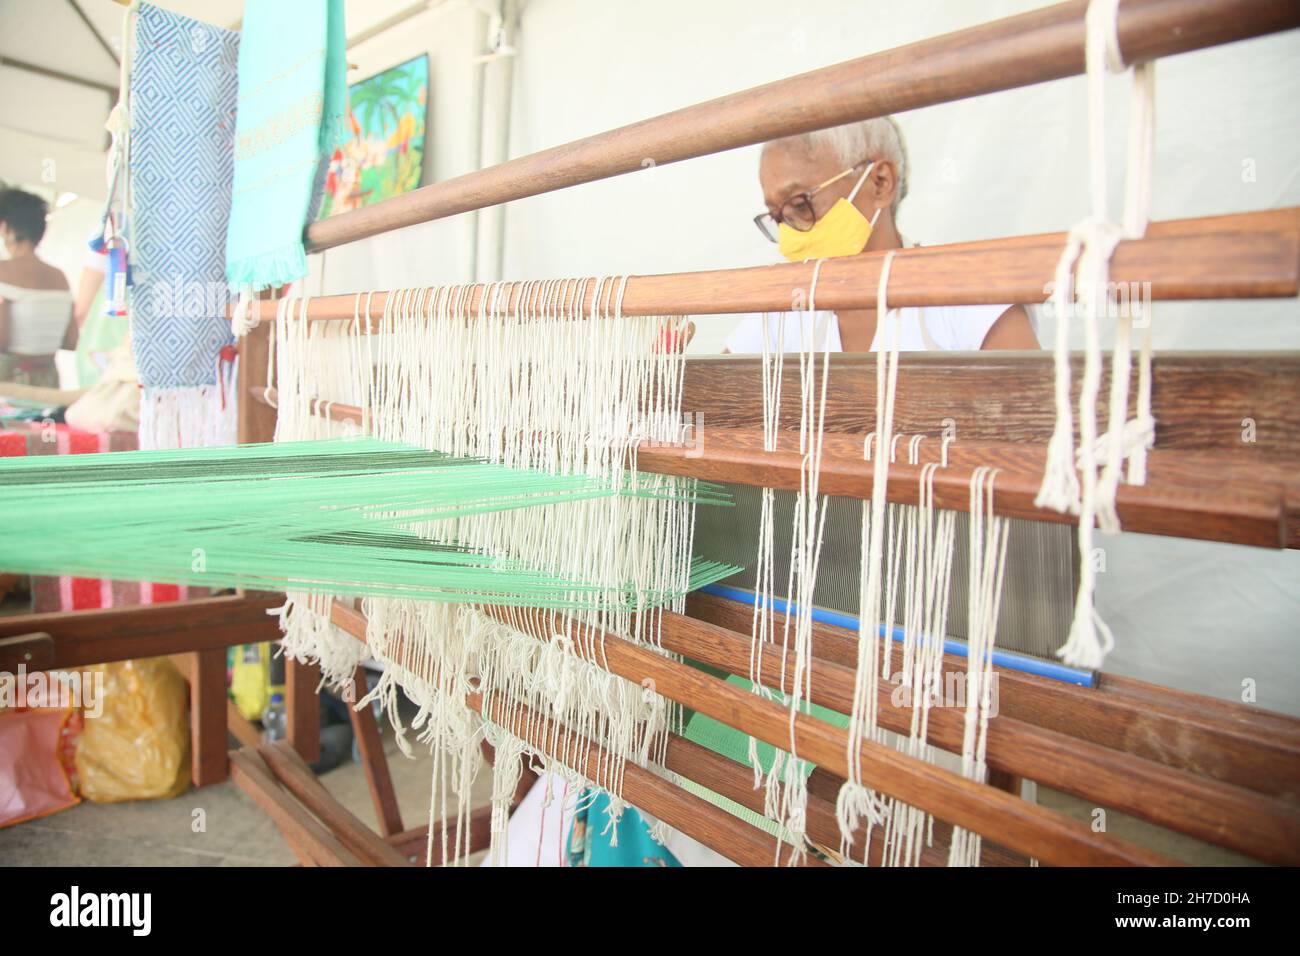 salvador, bahia, brazil - november 20, 2021: Woman is seen working on hand loom in Salvador city. Stock Photo